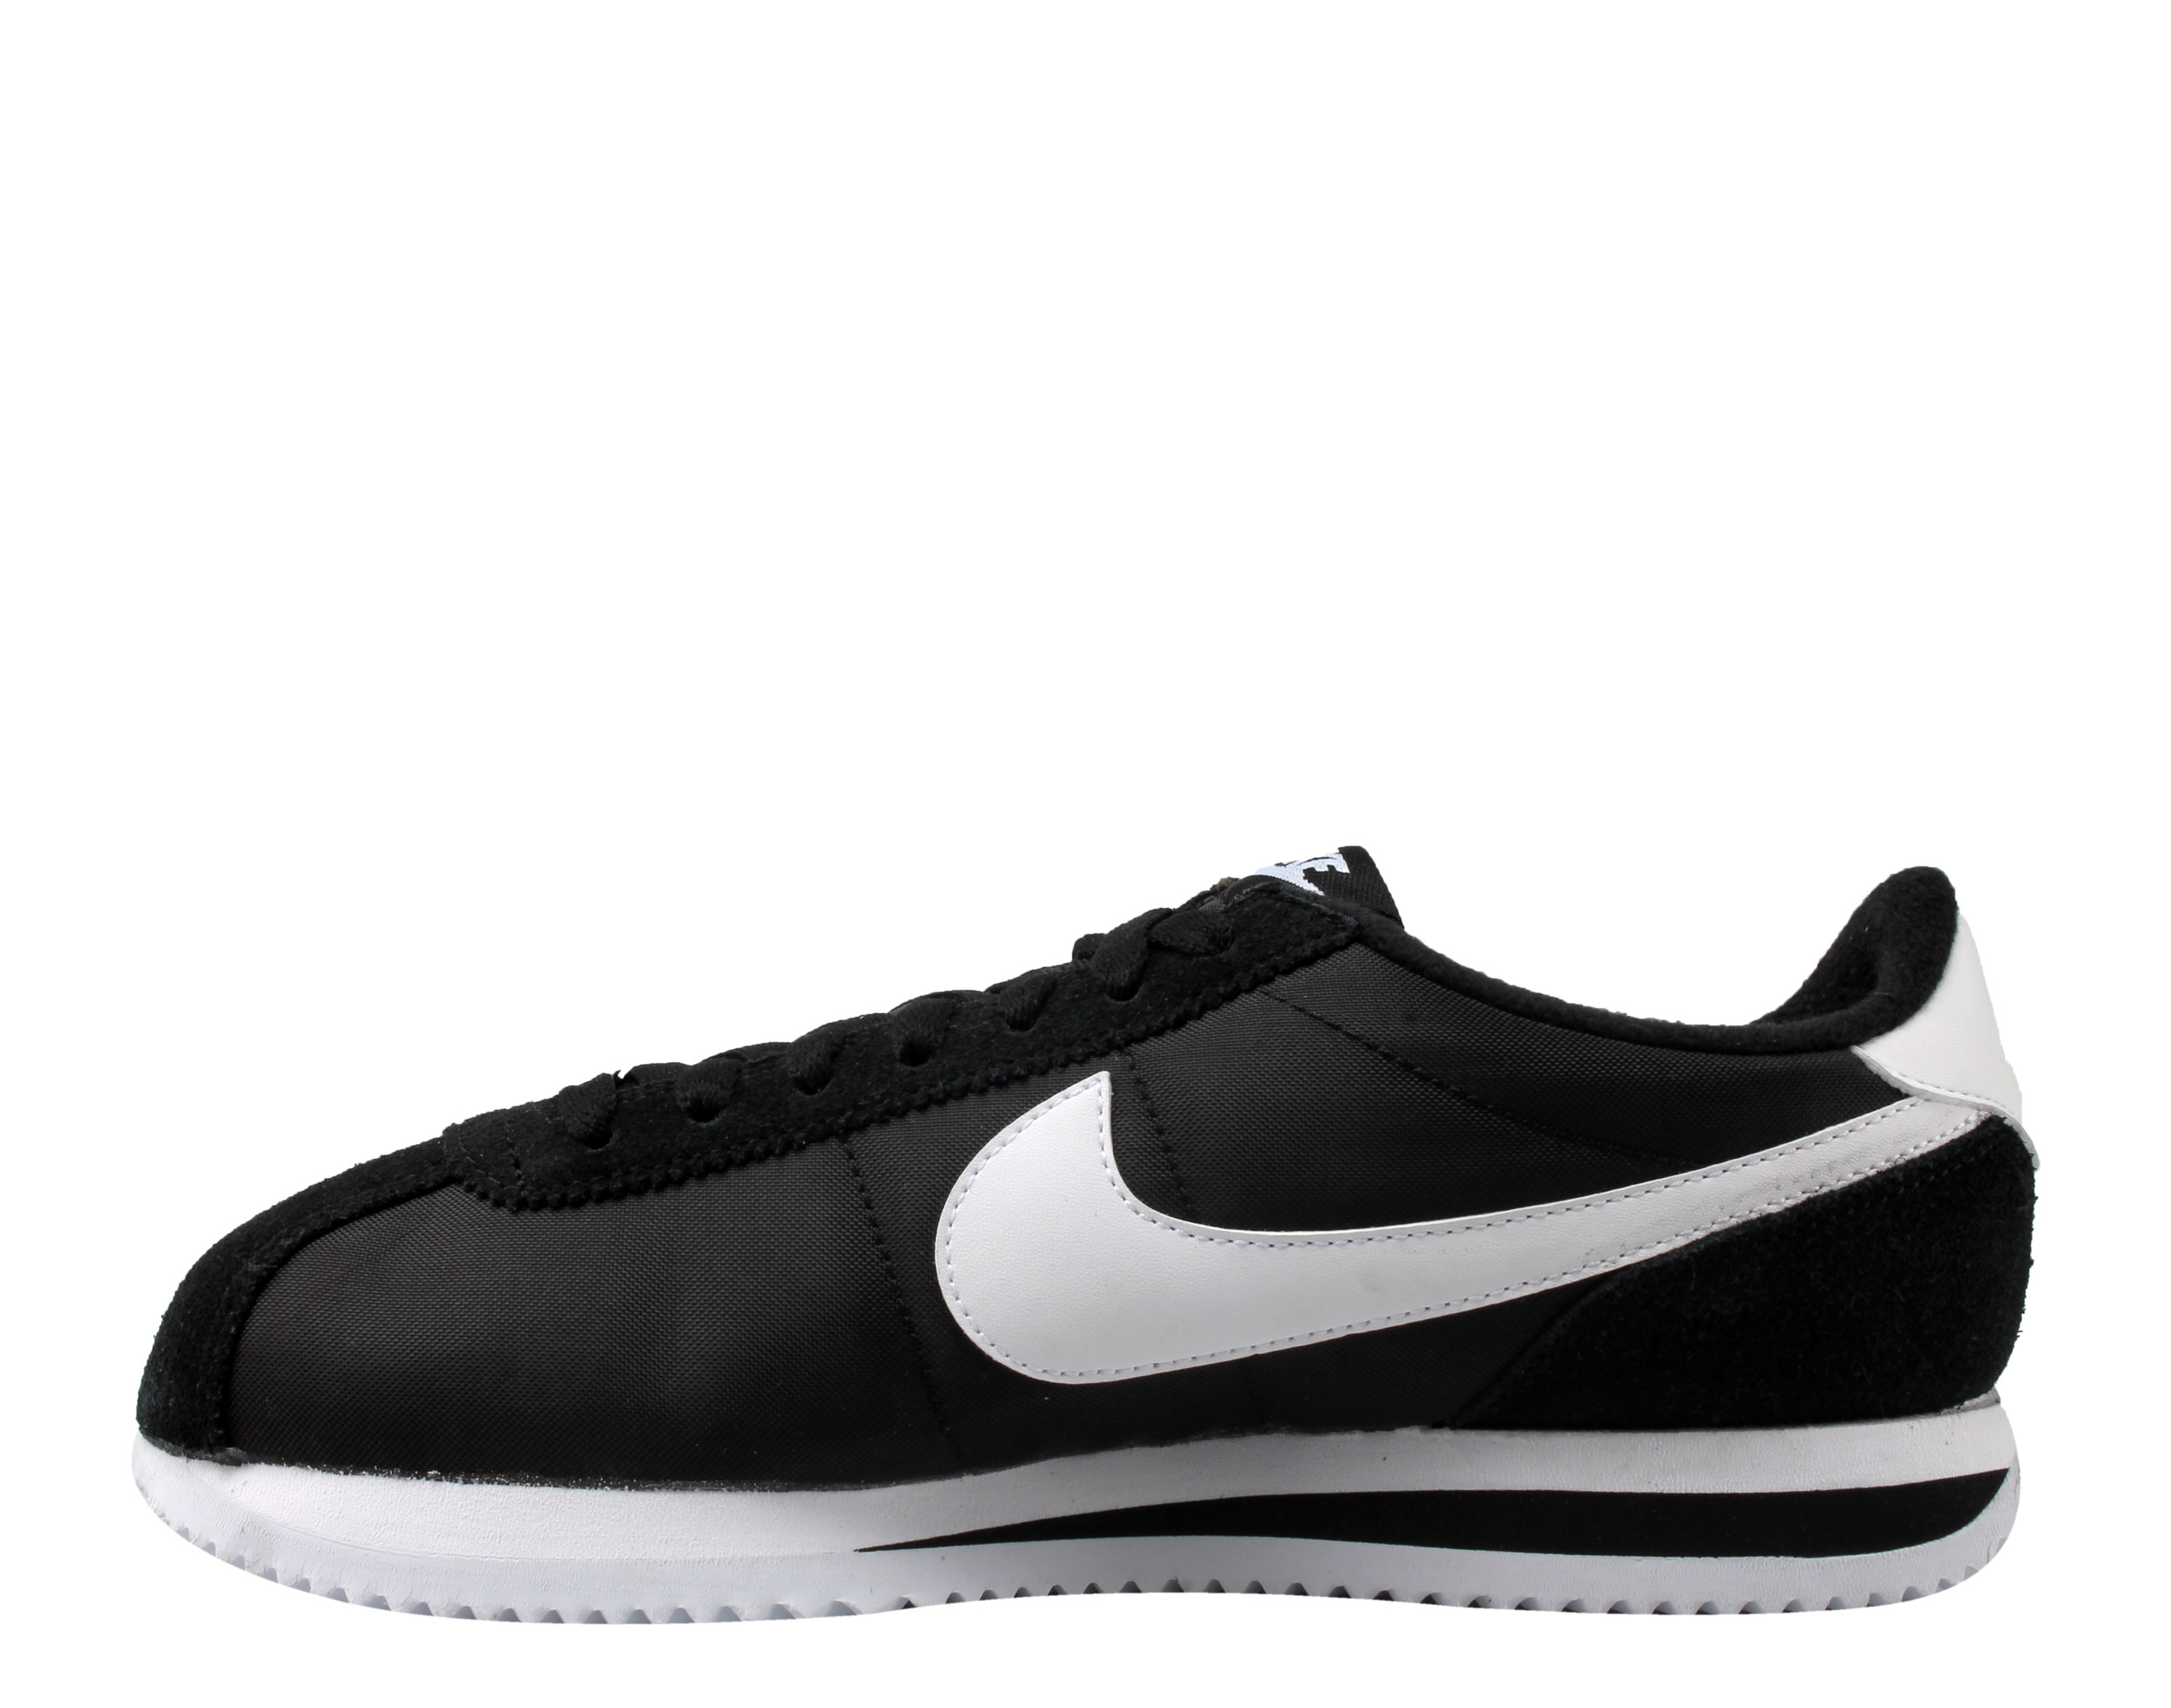 Nike Men's Cortez Basic Nylon Leather Athletic Fashion Sneakers Black Size 